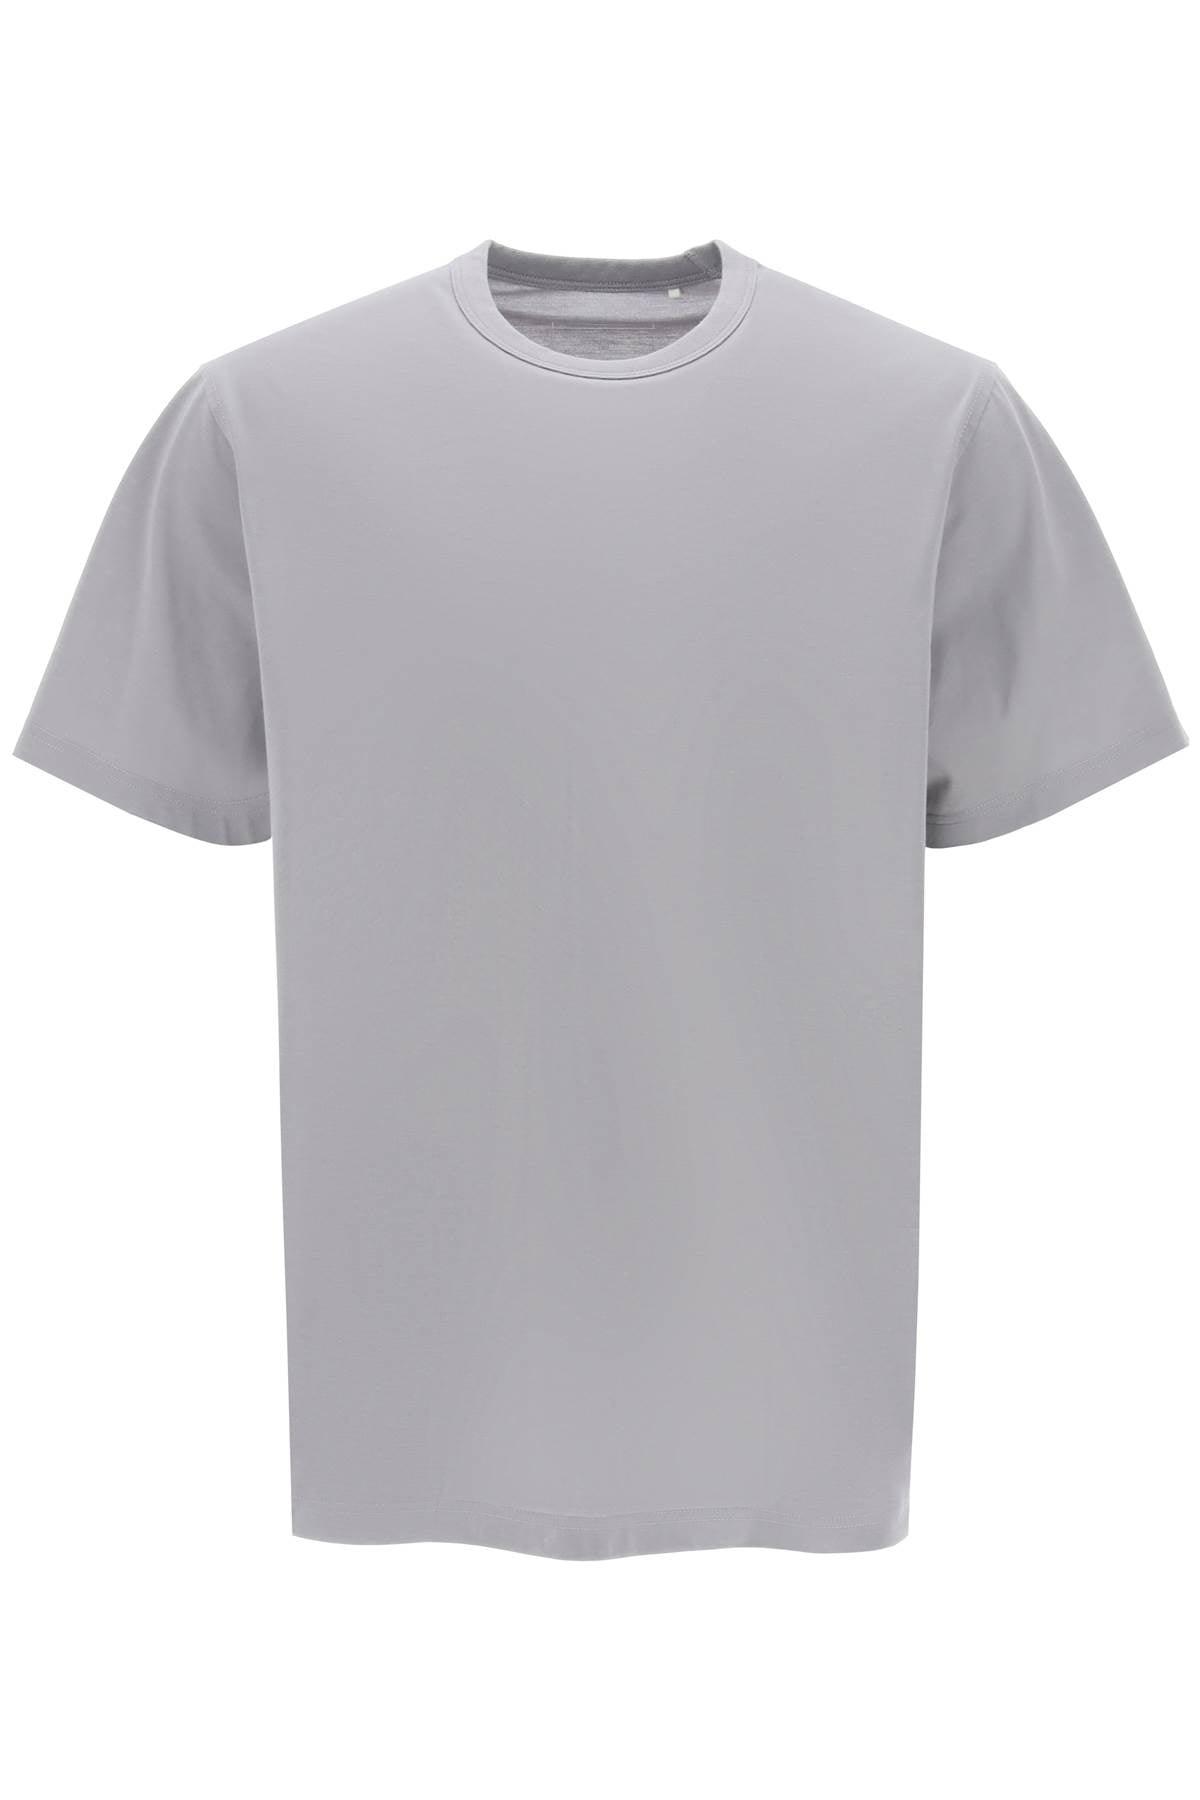 Y-3 Short-sleeved cotton-blend t-shirt - JOHN JULIA